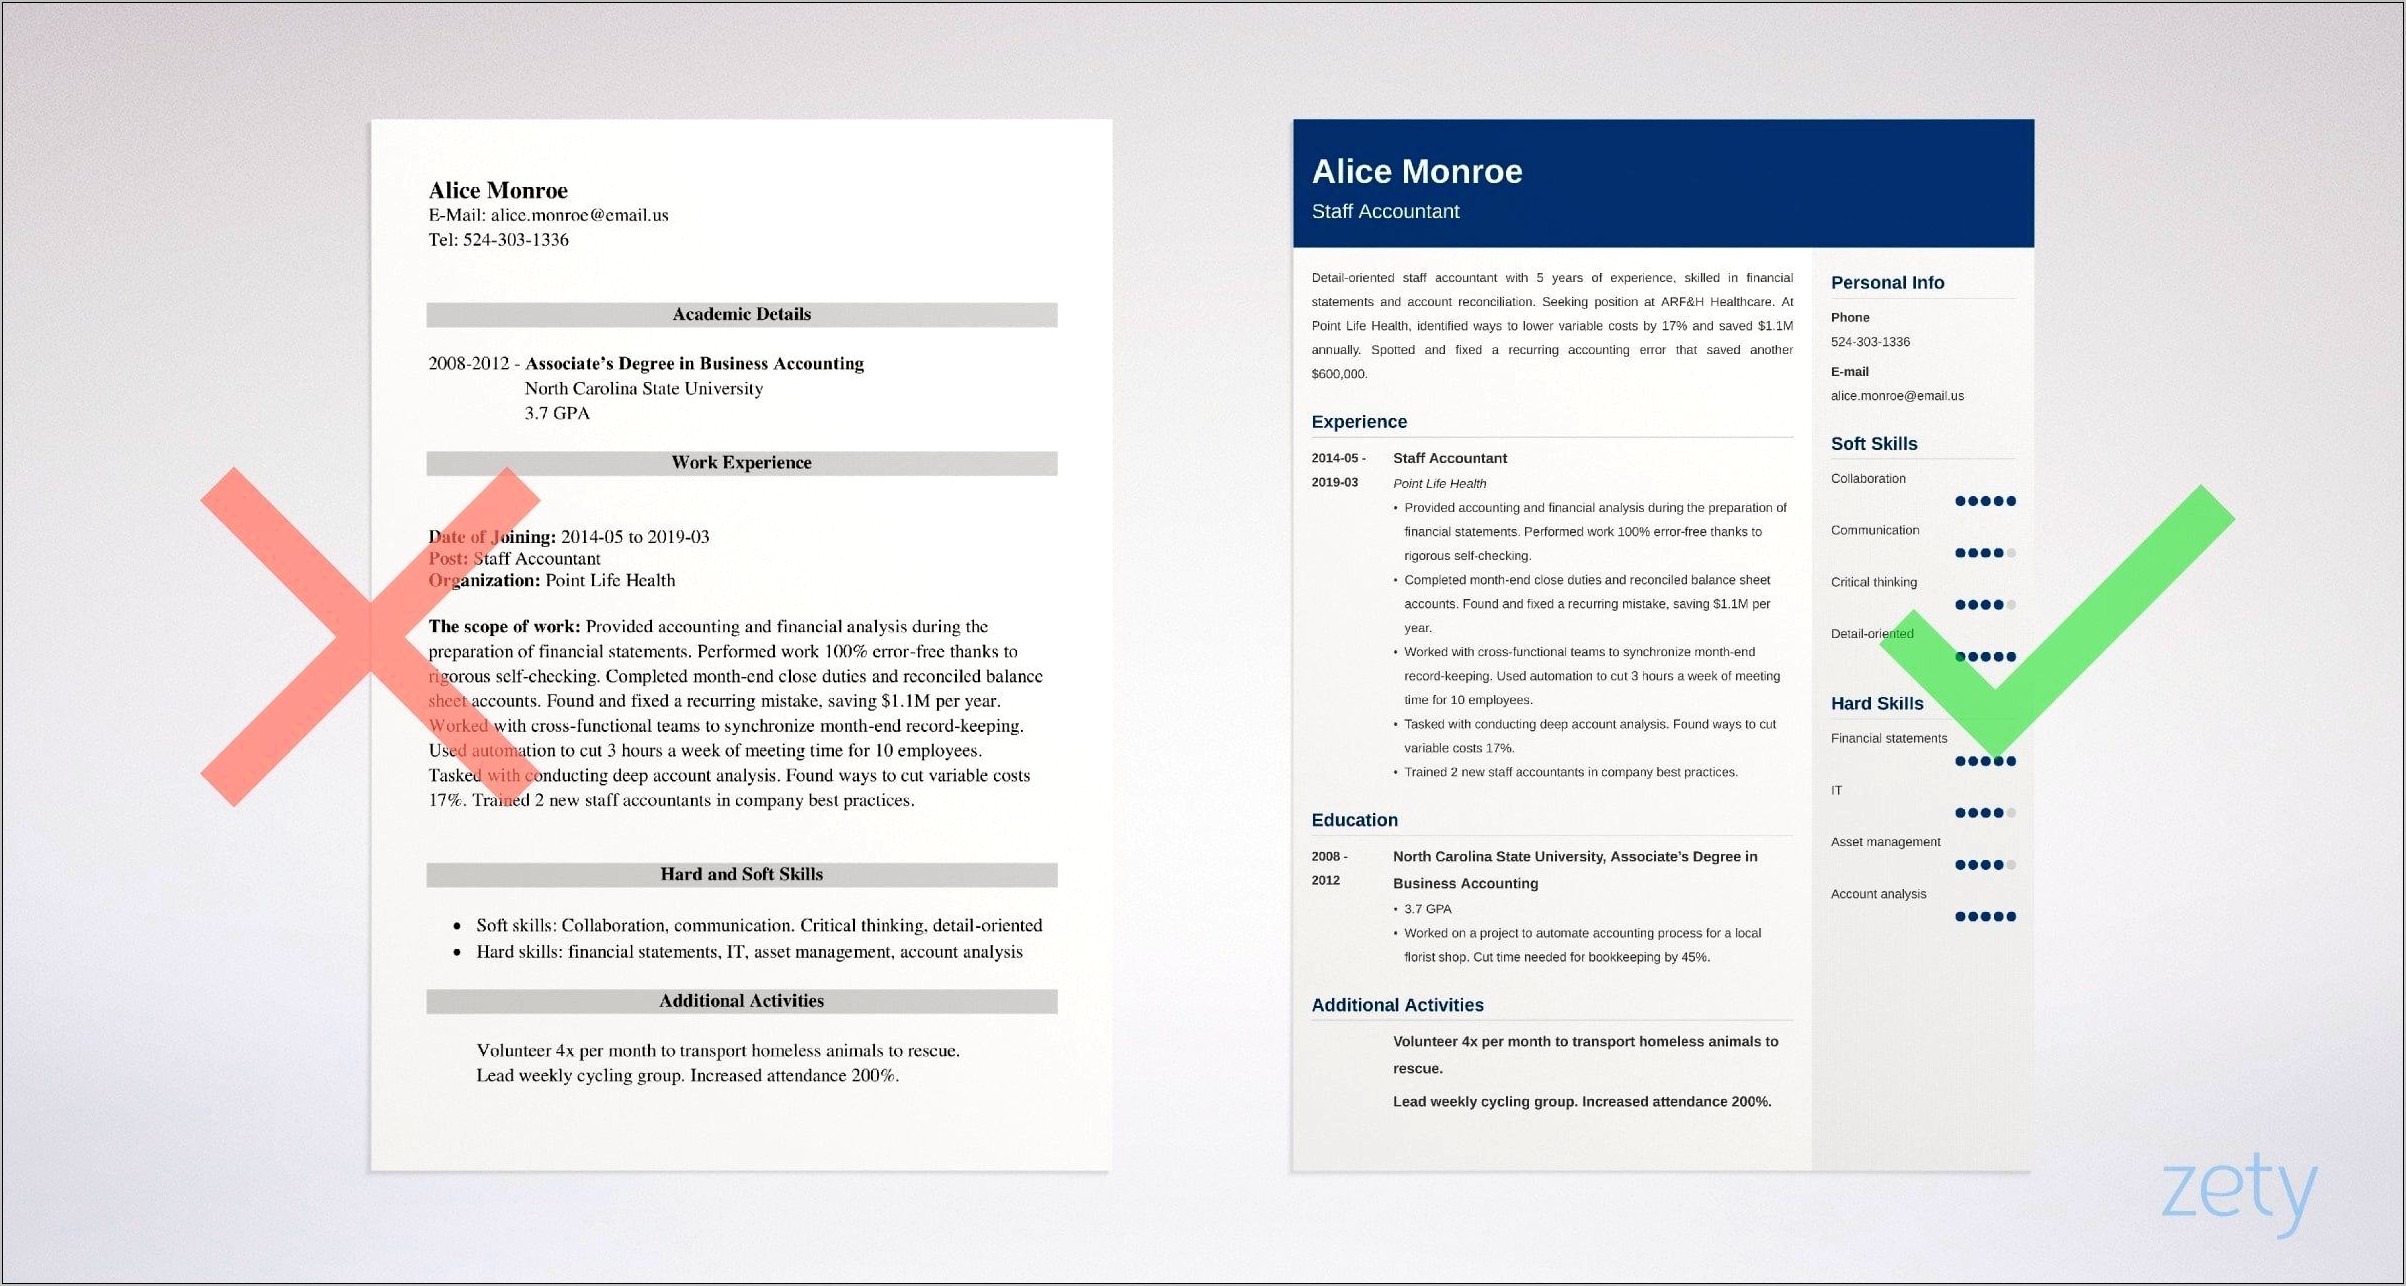 Staff Accountant Job Description Resume Sample